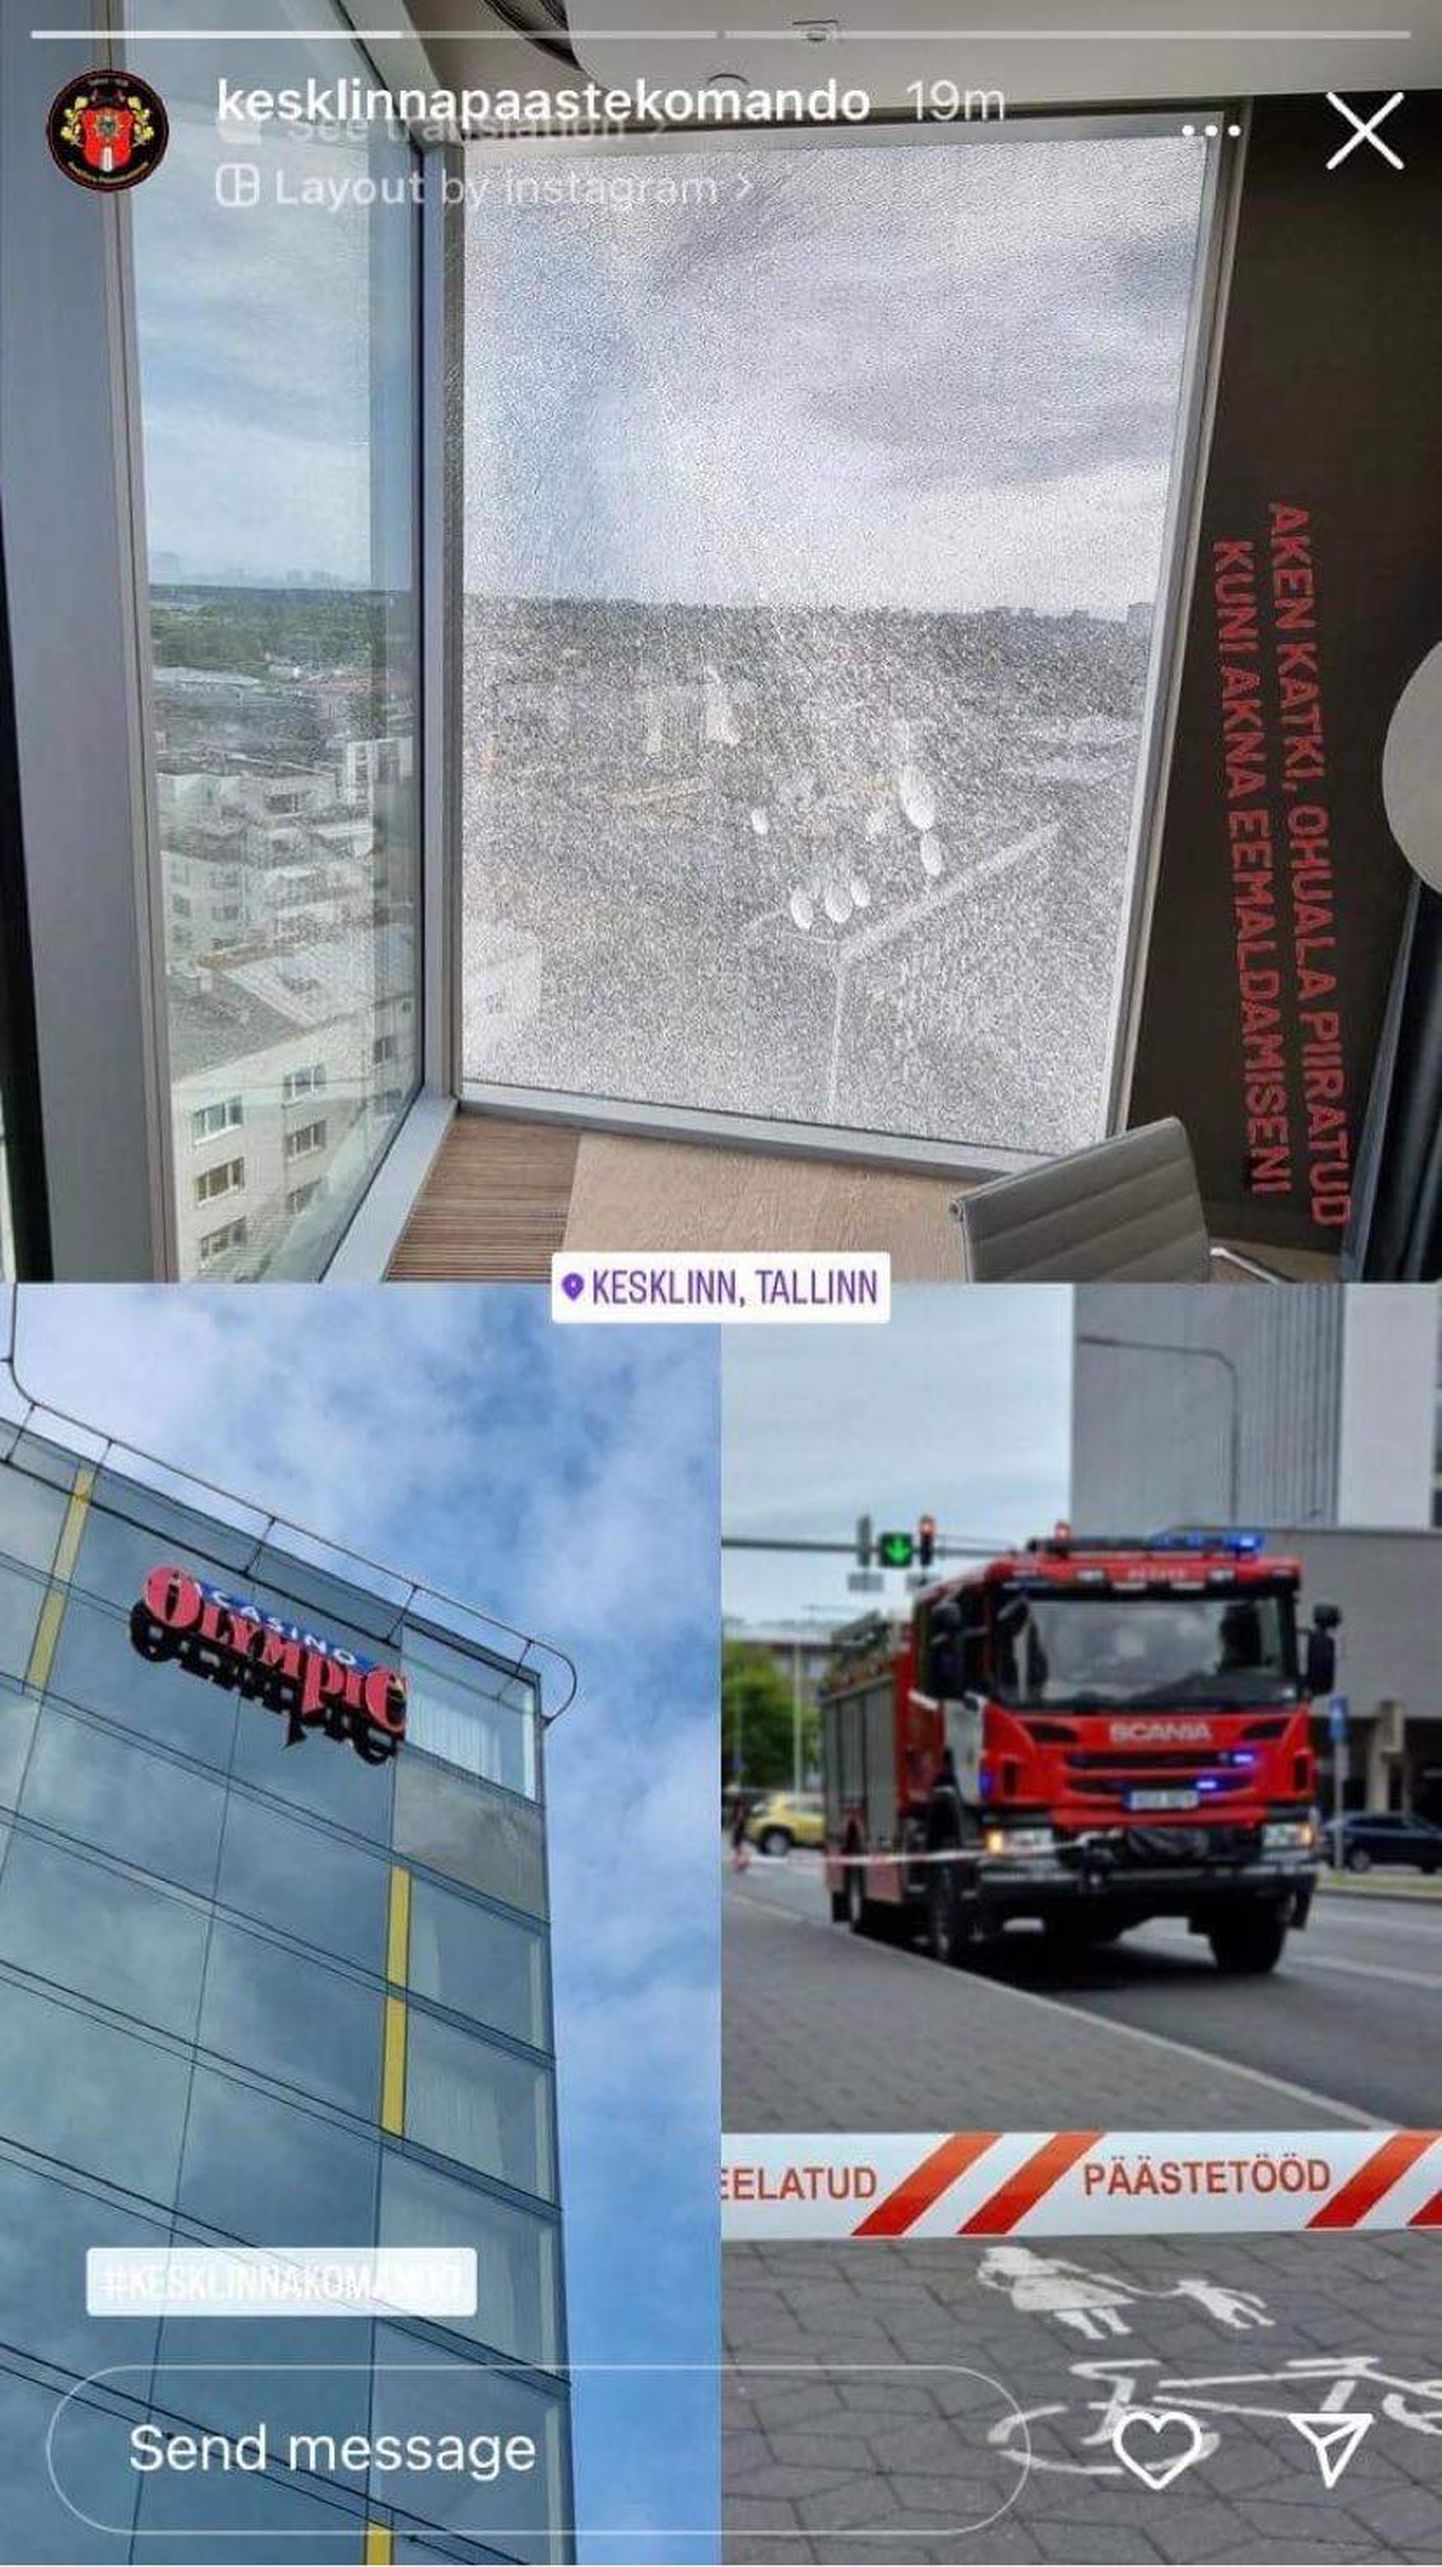 Hiltoni hotellis purunenud aken